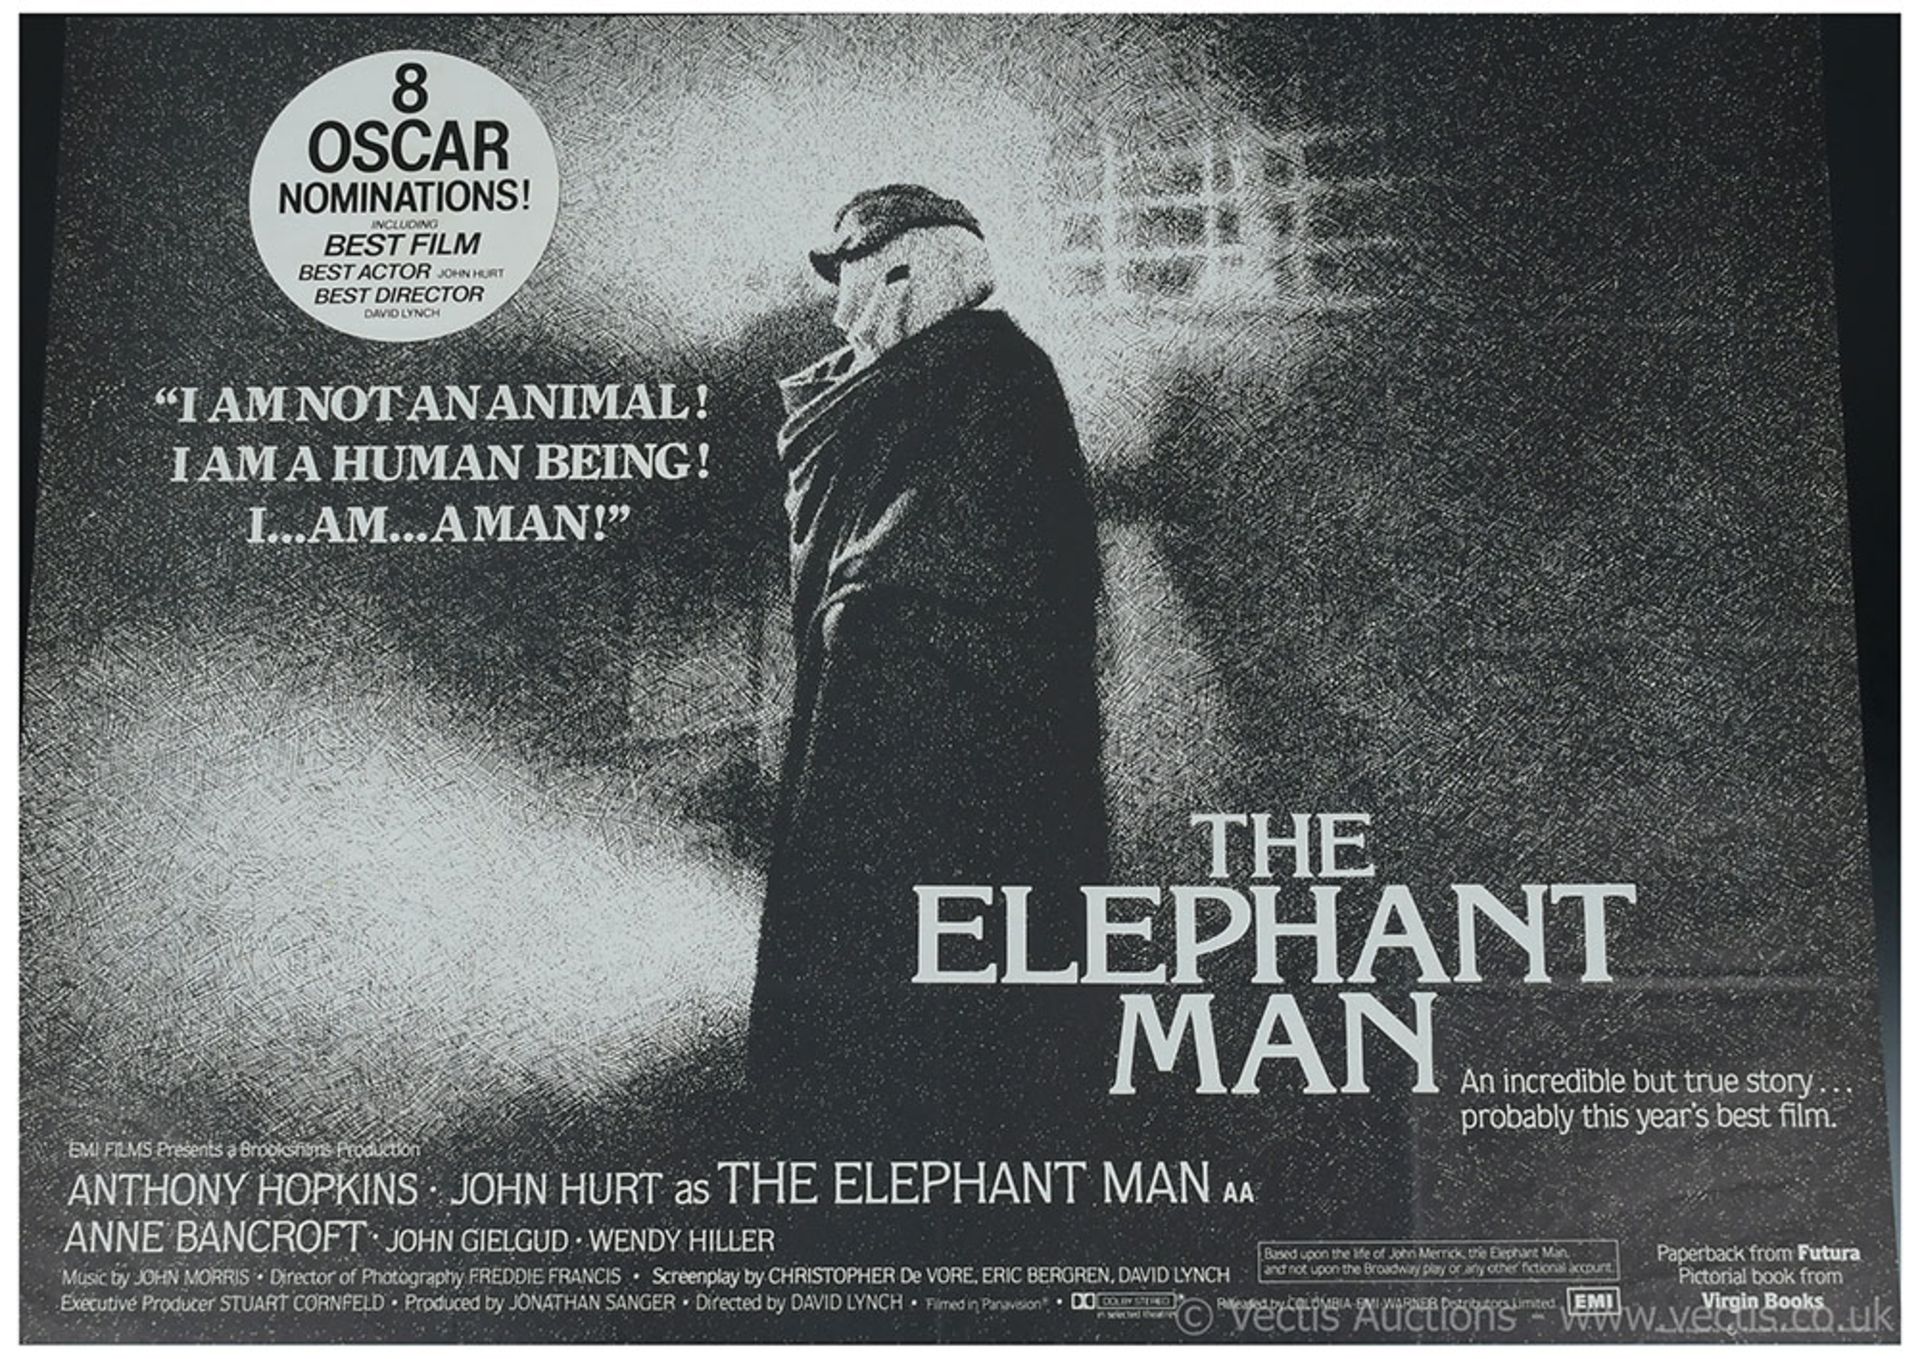 The Elephant Man 1980 British Quad poster, has